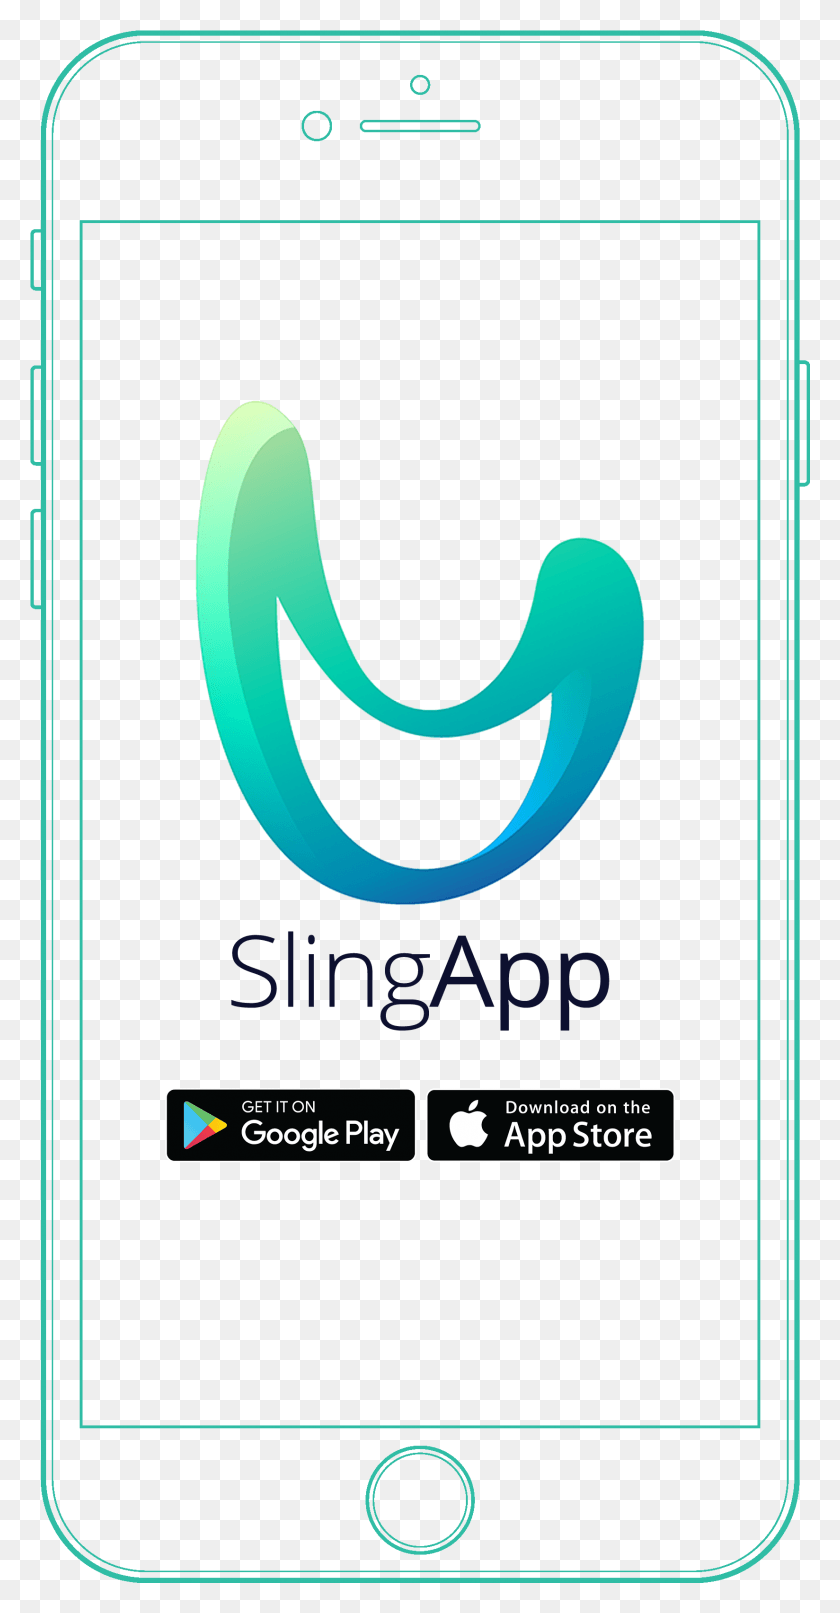 1648x3282 Descargar Png Slingapp En Ios Android App Store, Etiqueta, Texto, Publicidad Hd Png